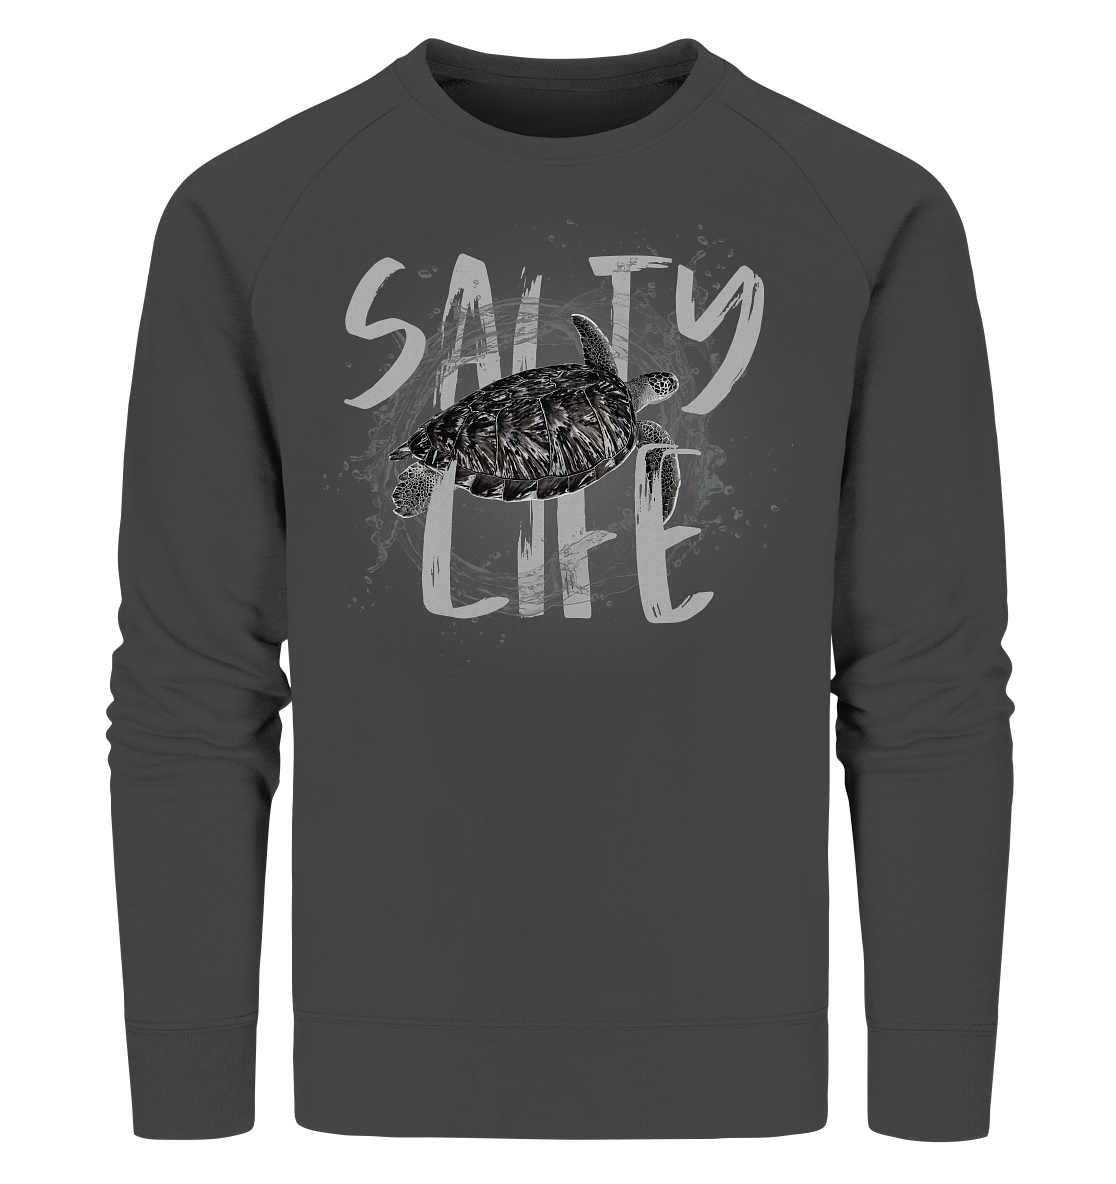 Salty Life "Sea Turtle" - Organic Sweatshirt